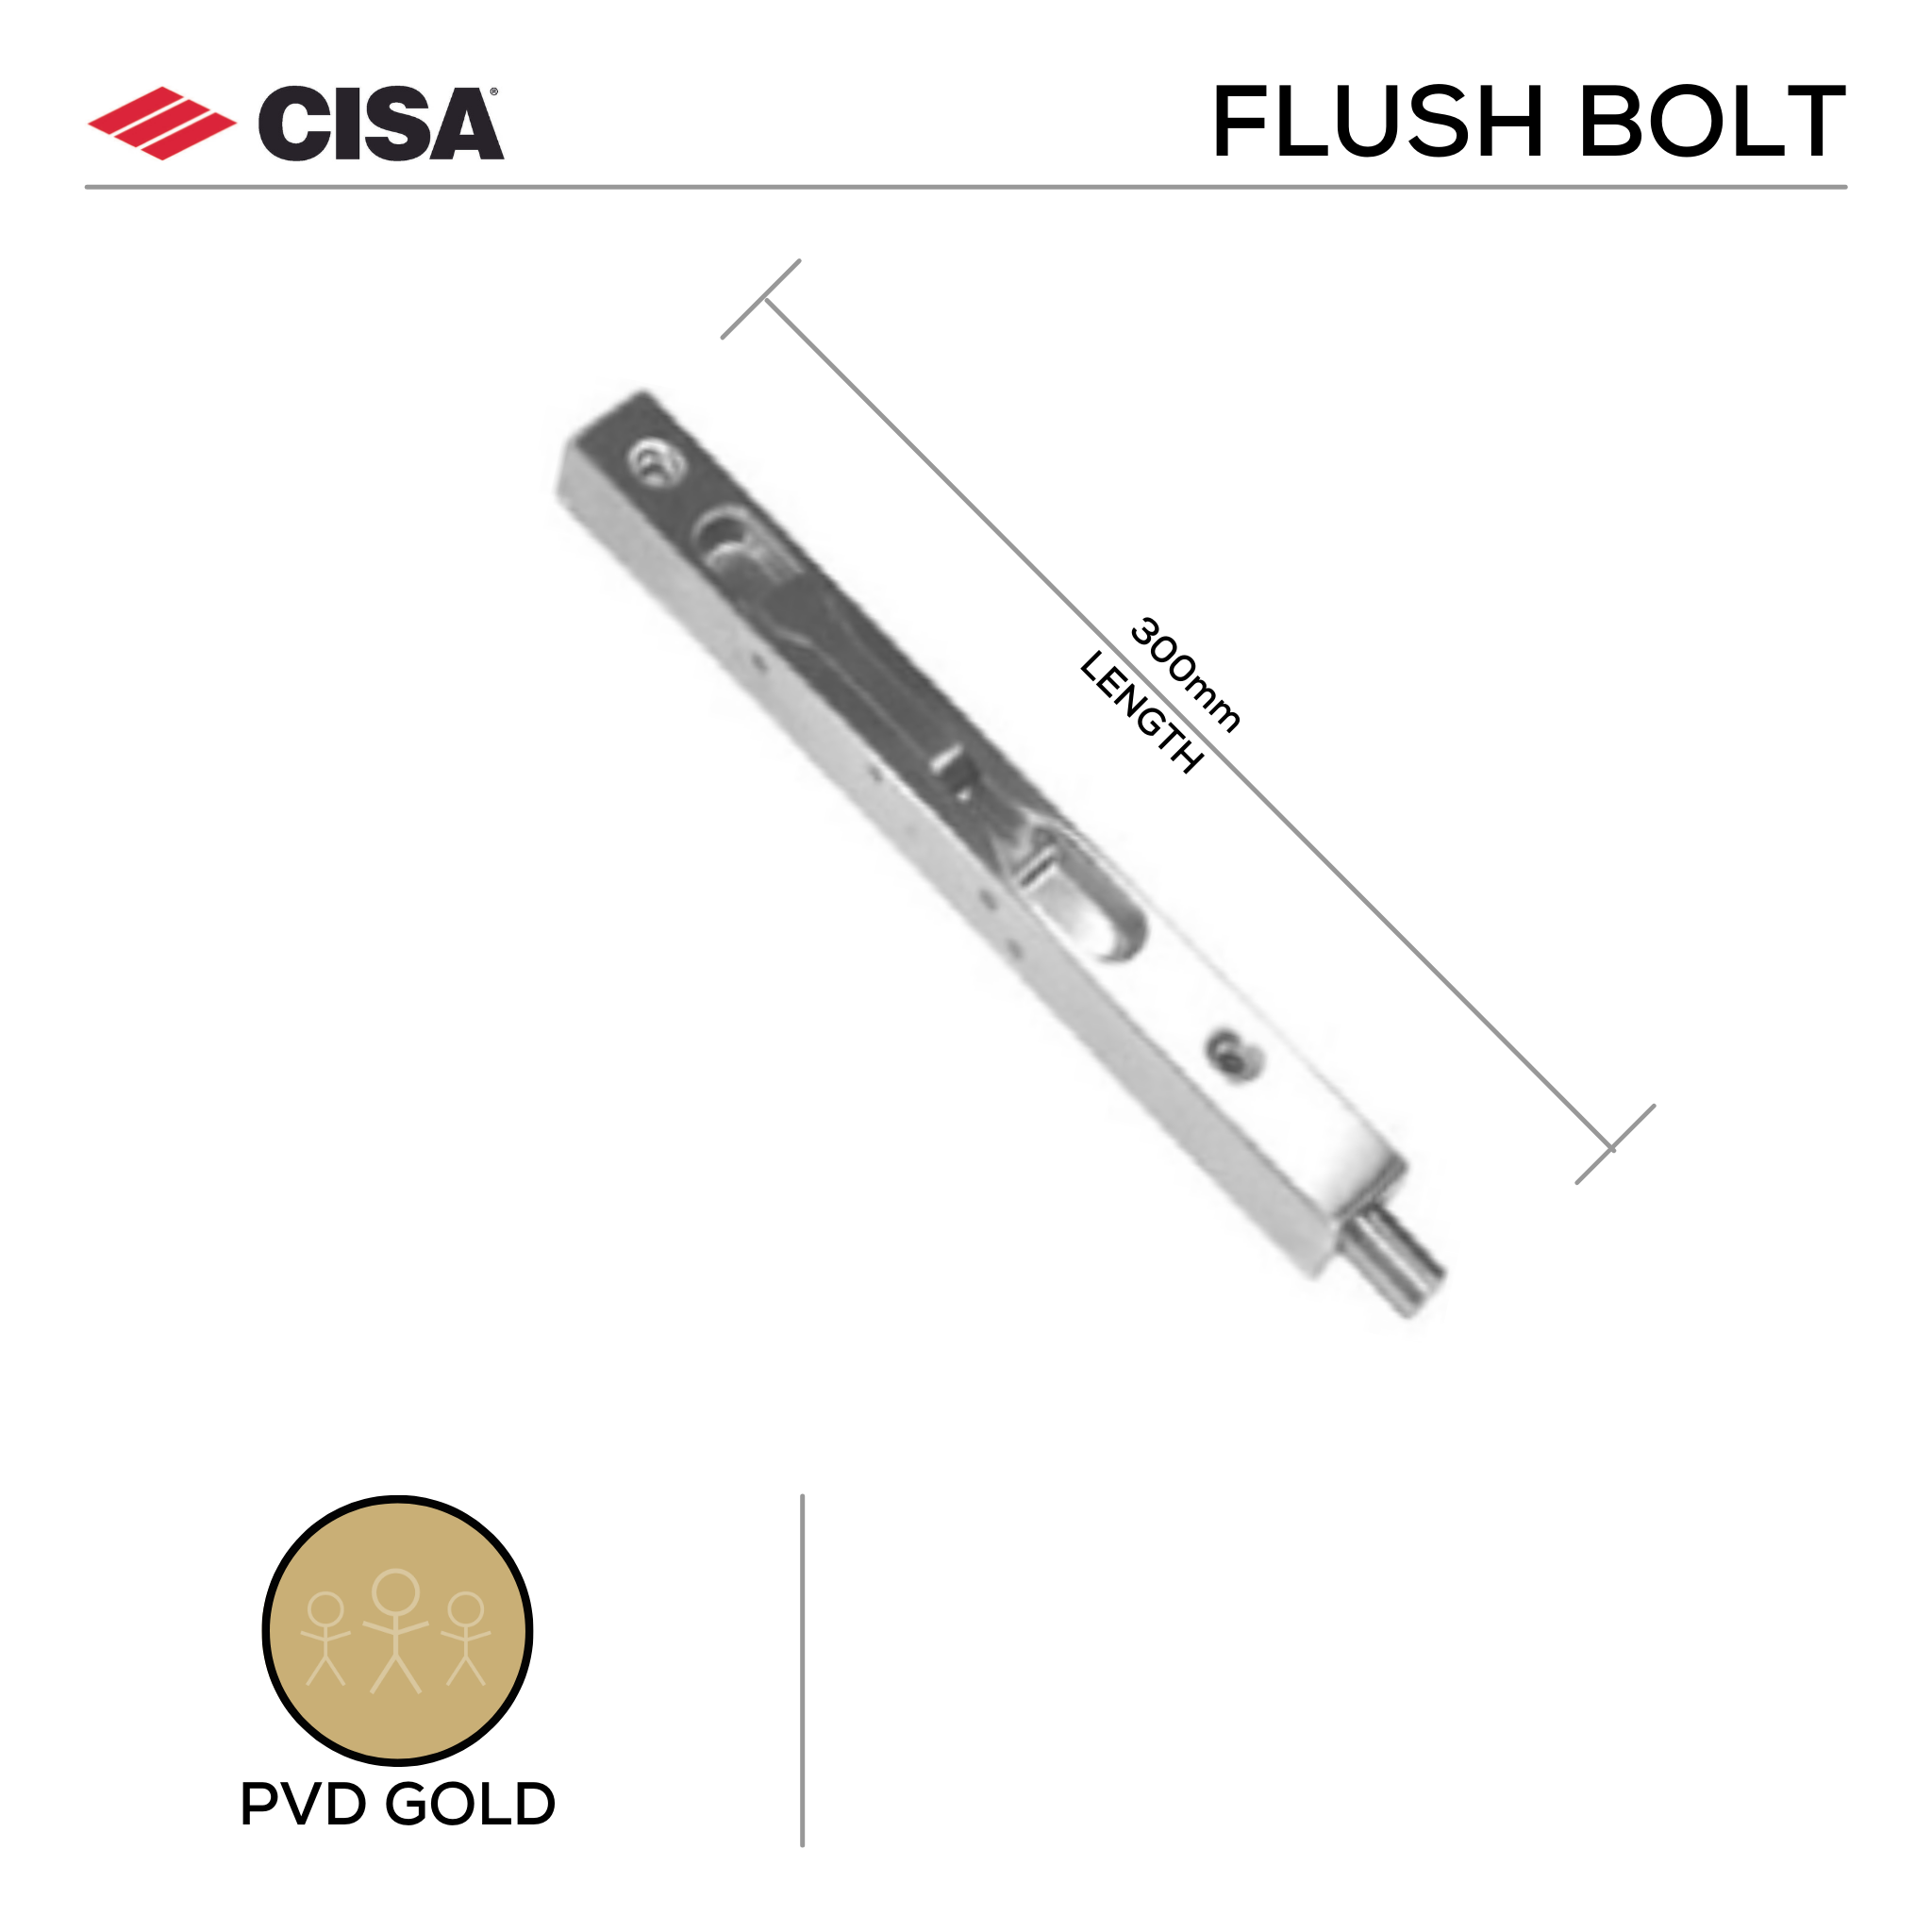 FBB300.GD, Flush Bolt, Box Type, 300mm (l) x 19mm (w), Gold PVD, CISA